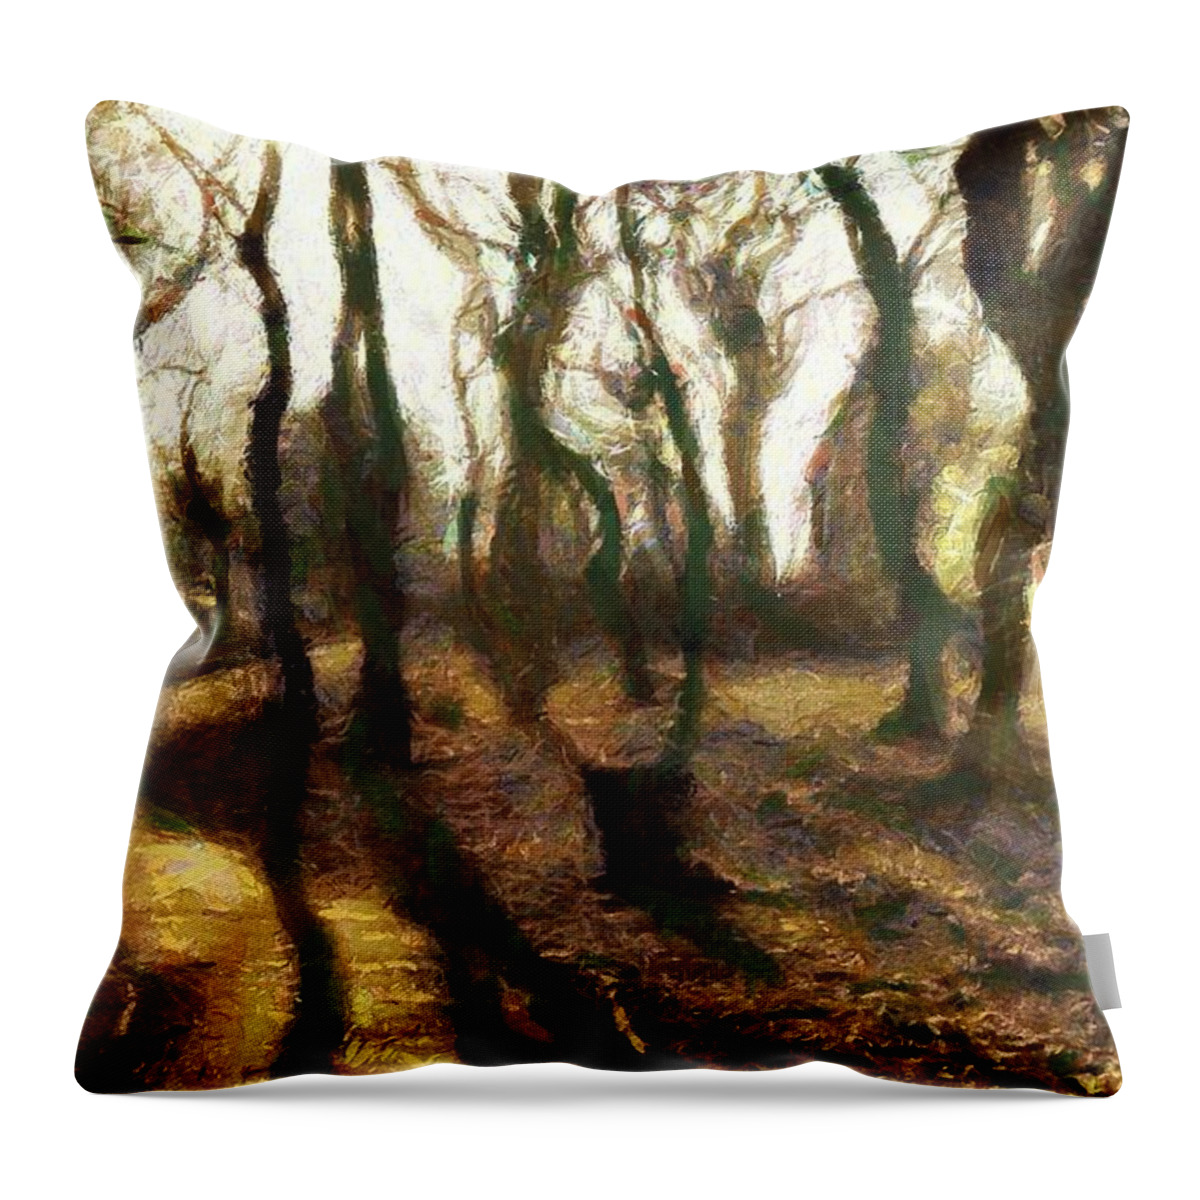 Nature Throw Pillow featuring the digital art The frightening forest by Gun Legler